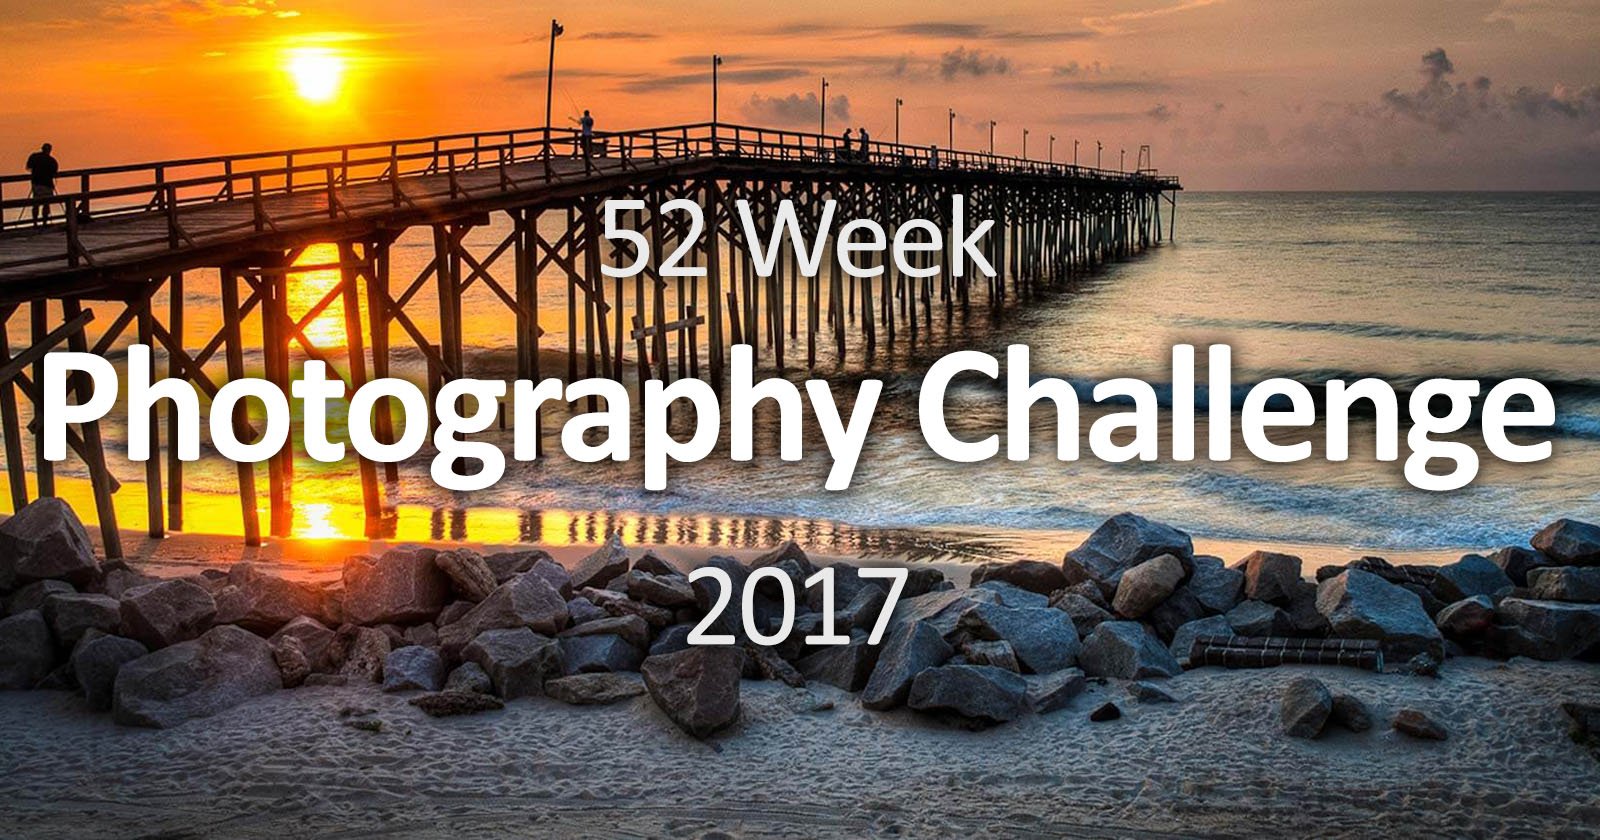  shoot week photo challenge 2017 improve your 